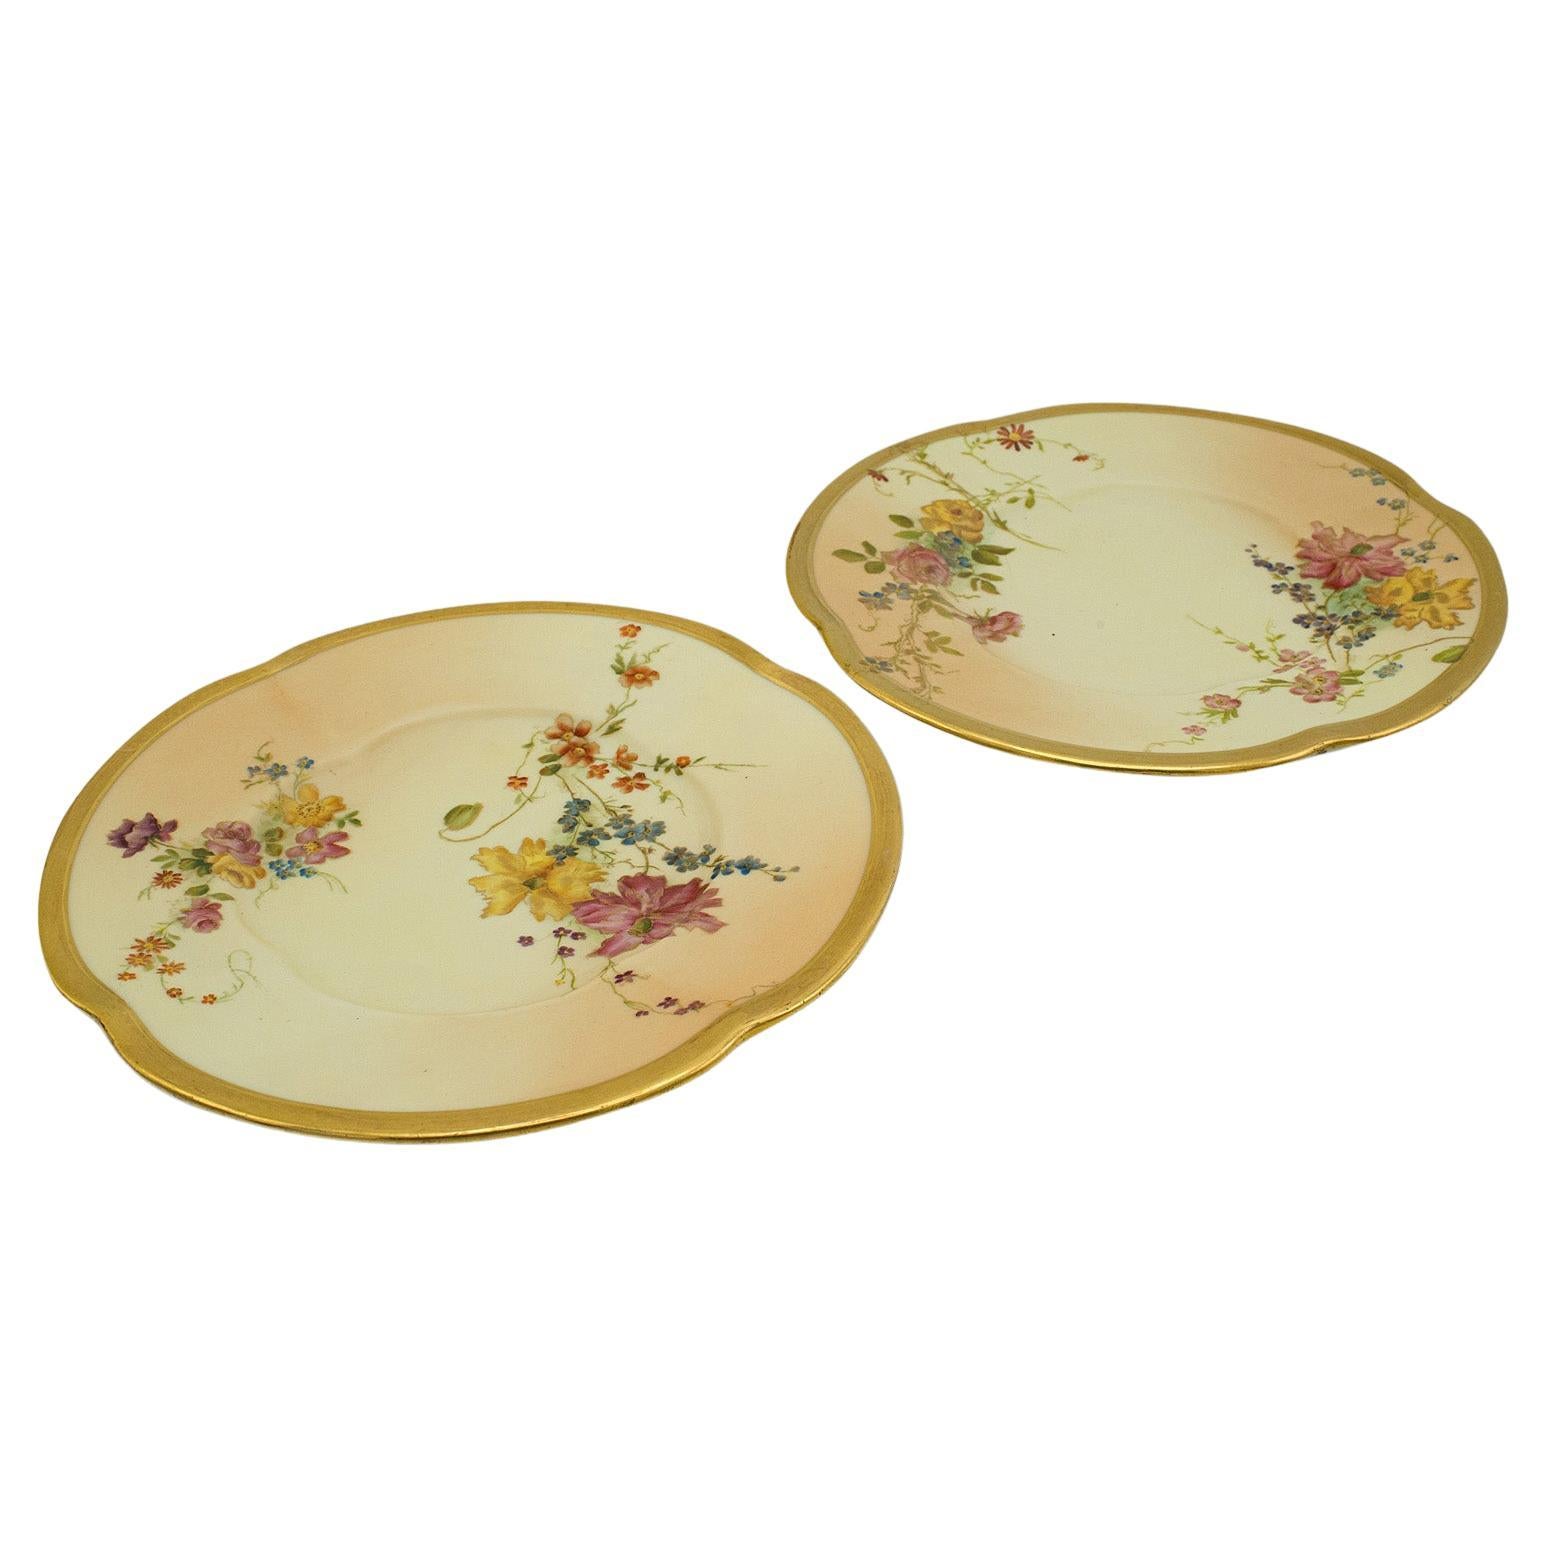 Pair of Antique Side Plates, English, Ceramic, Decorative, Saucer, Victorian